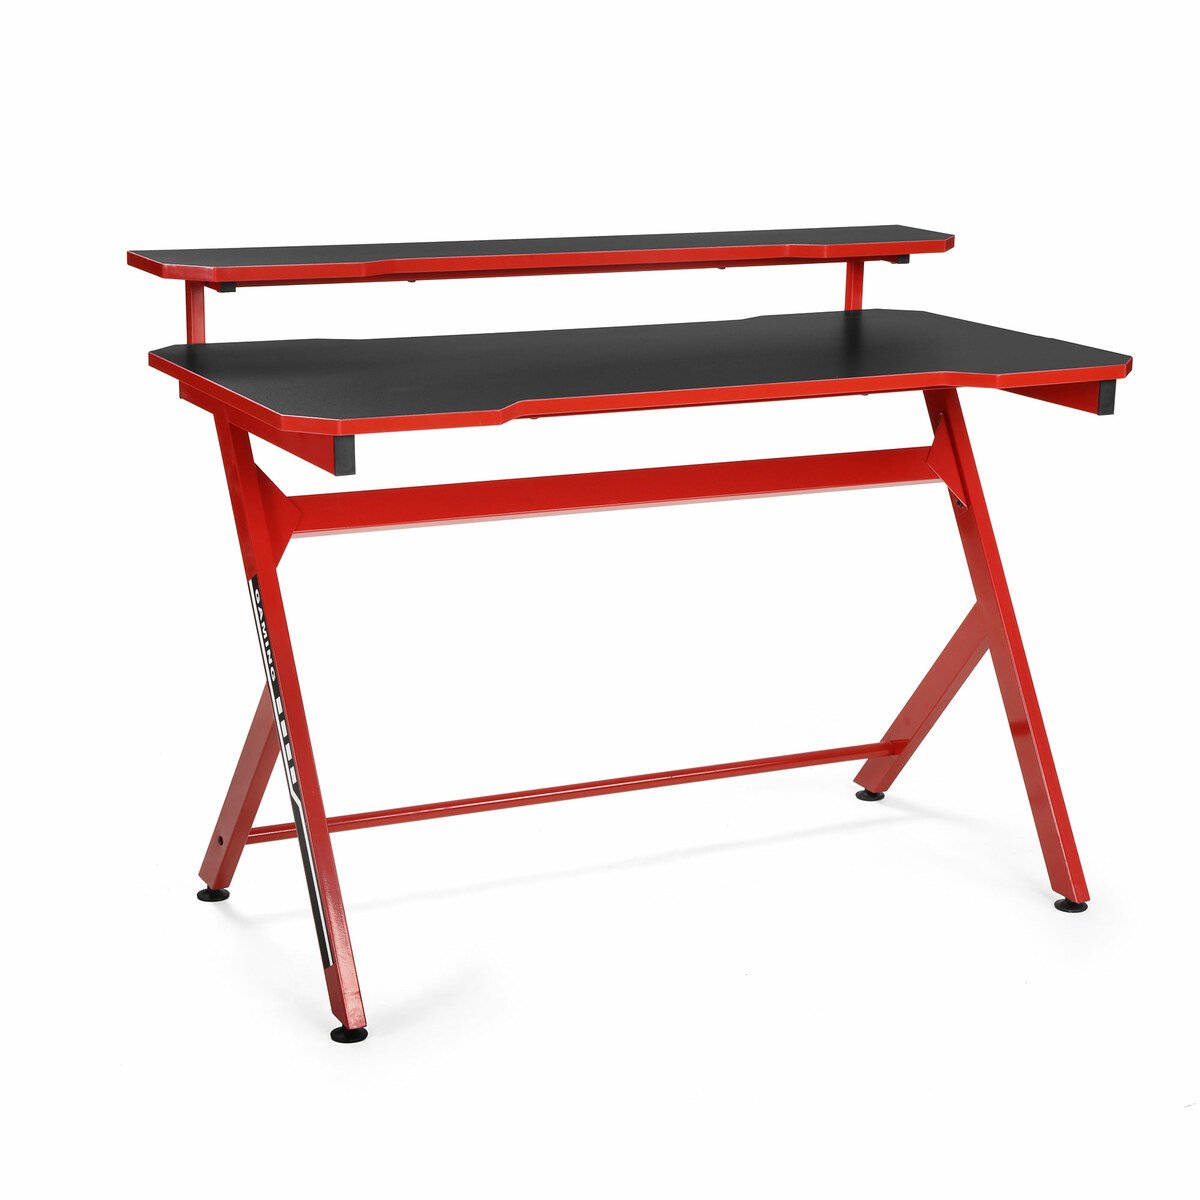 Maple Leaf Home Multi Purpose Table FG2095 Red & Black, Size: L120 x W61.5 x H88cm